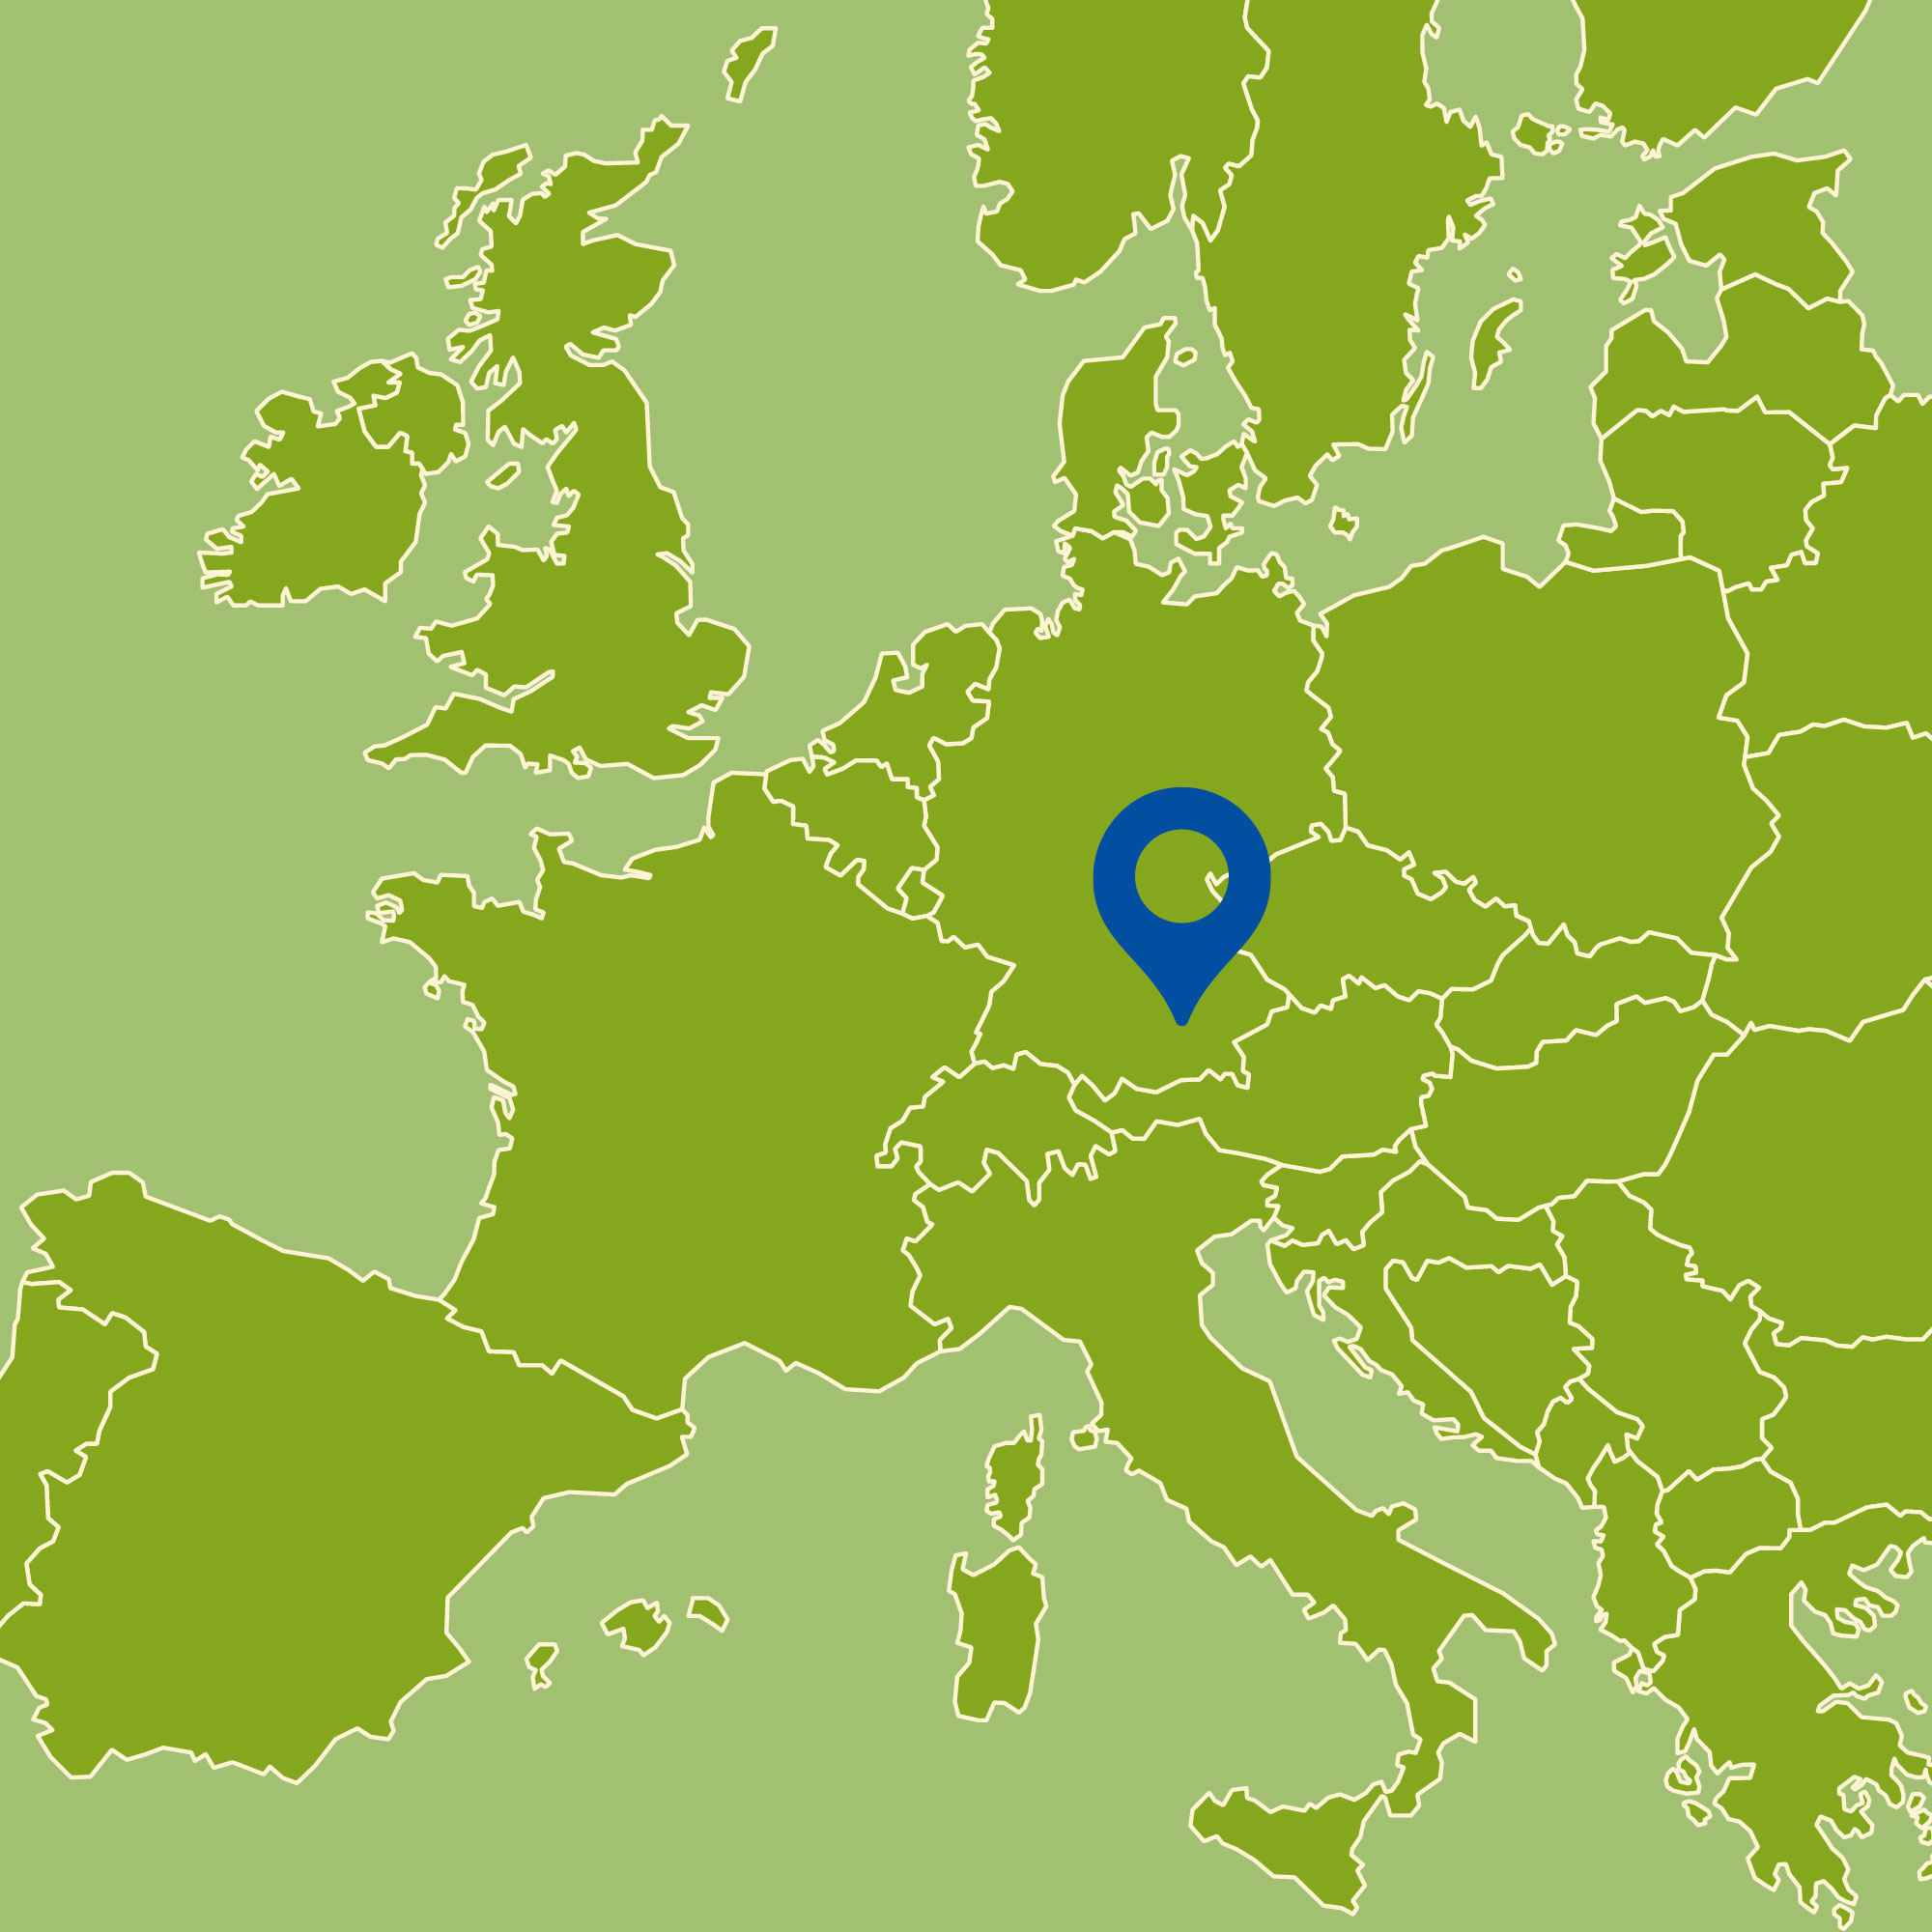 Alpenhain location in Europe